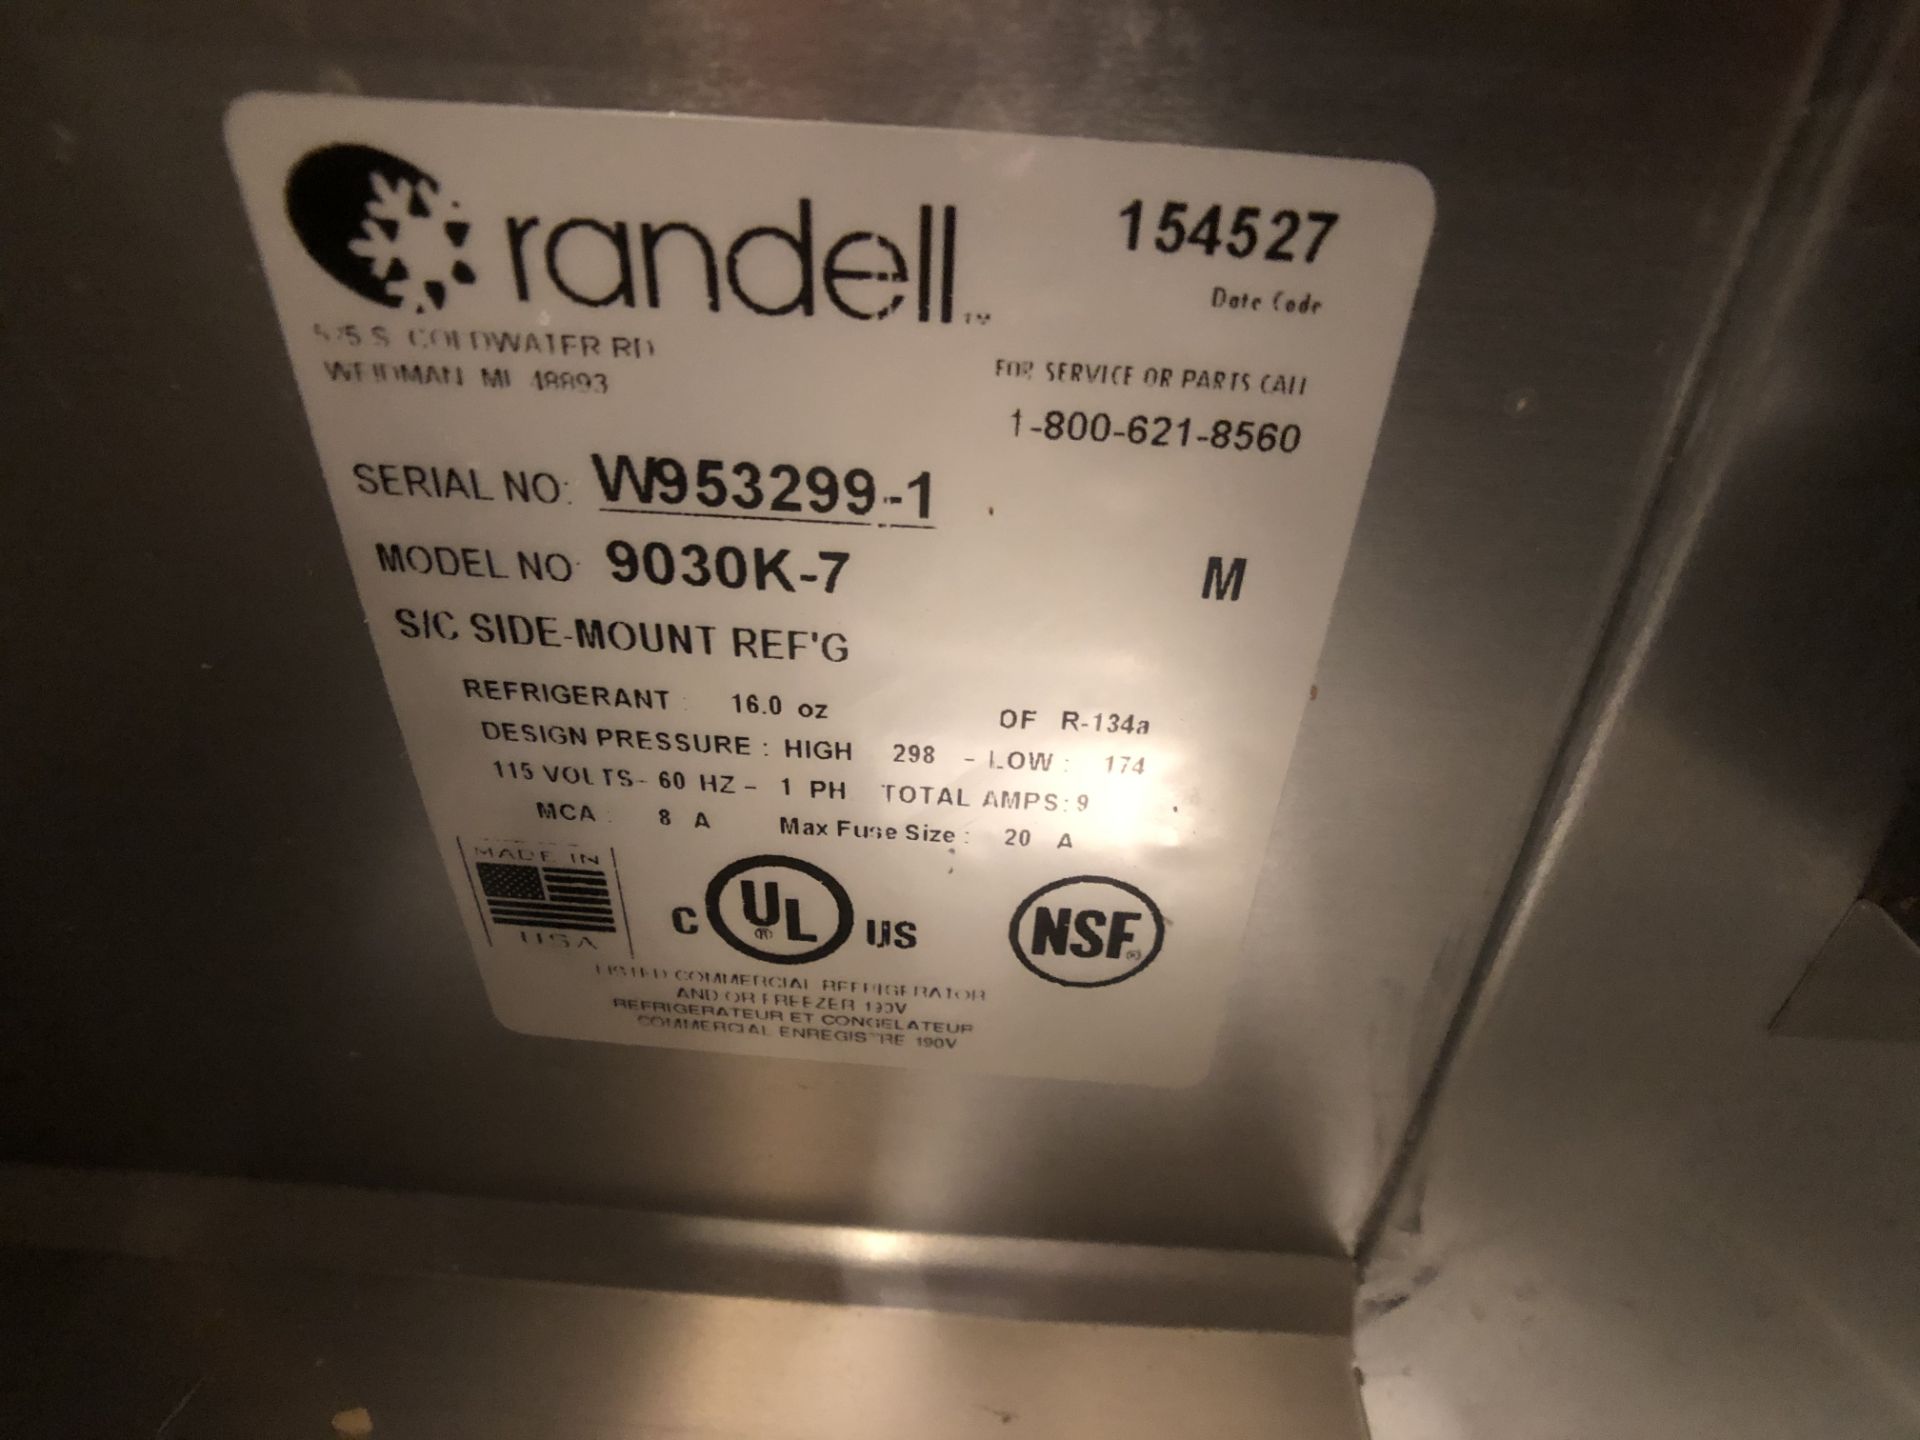 Randell Refrigerator / Sandwich Prep Table, Model 9030K-7, S/N W953299-1, 48" W x 33" D36" H - Image 5 of 5